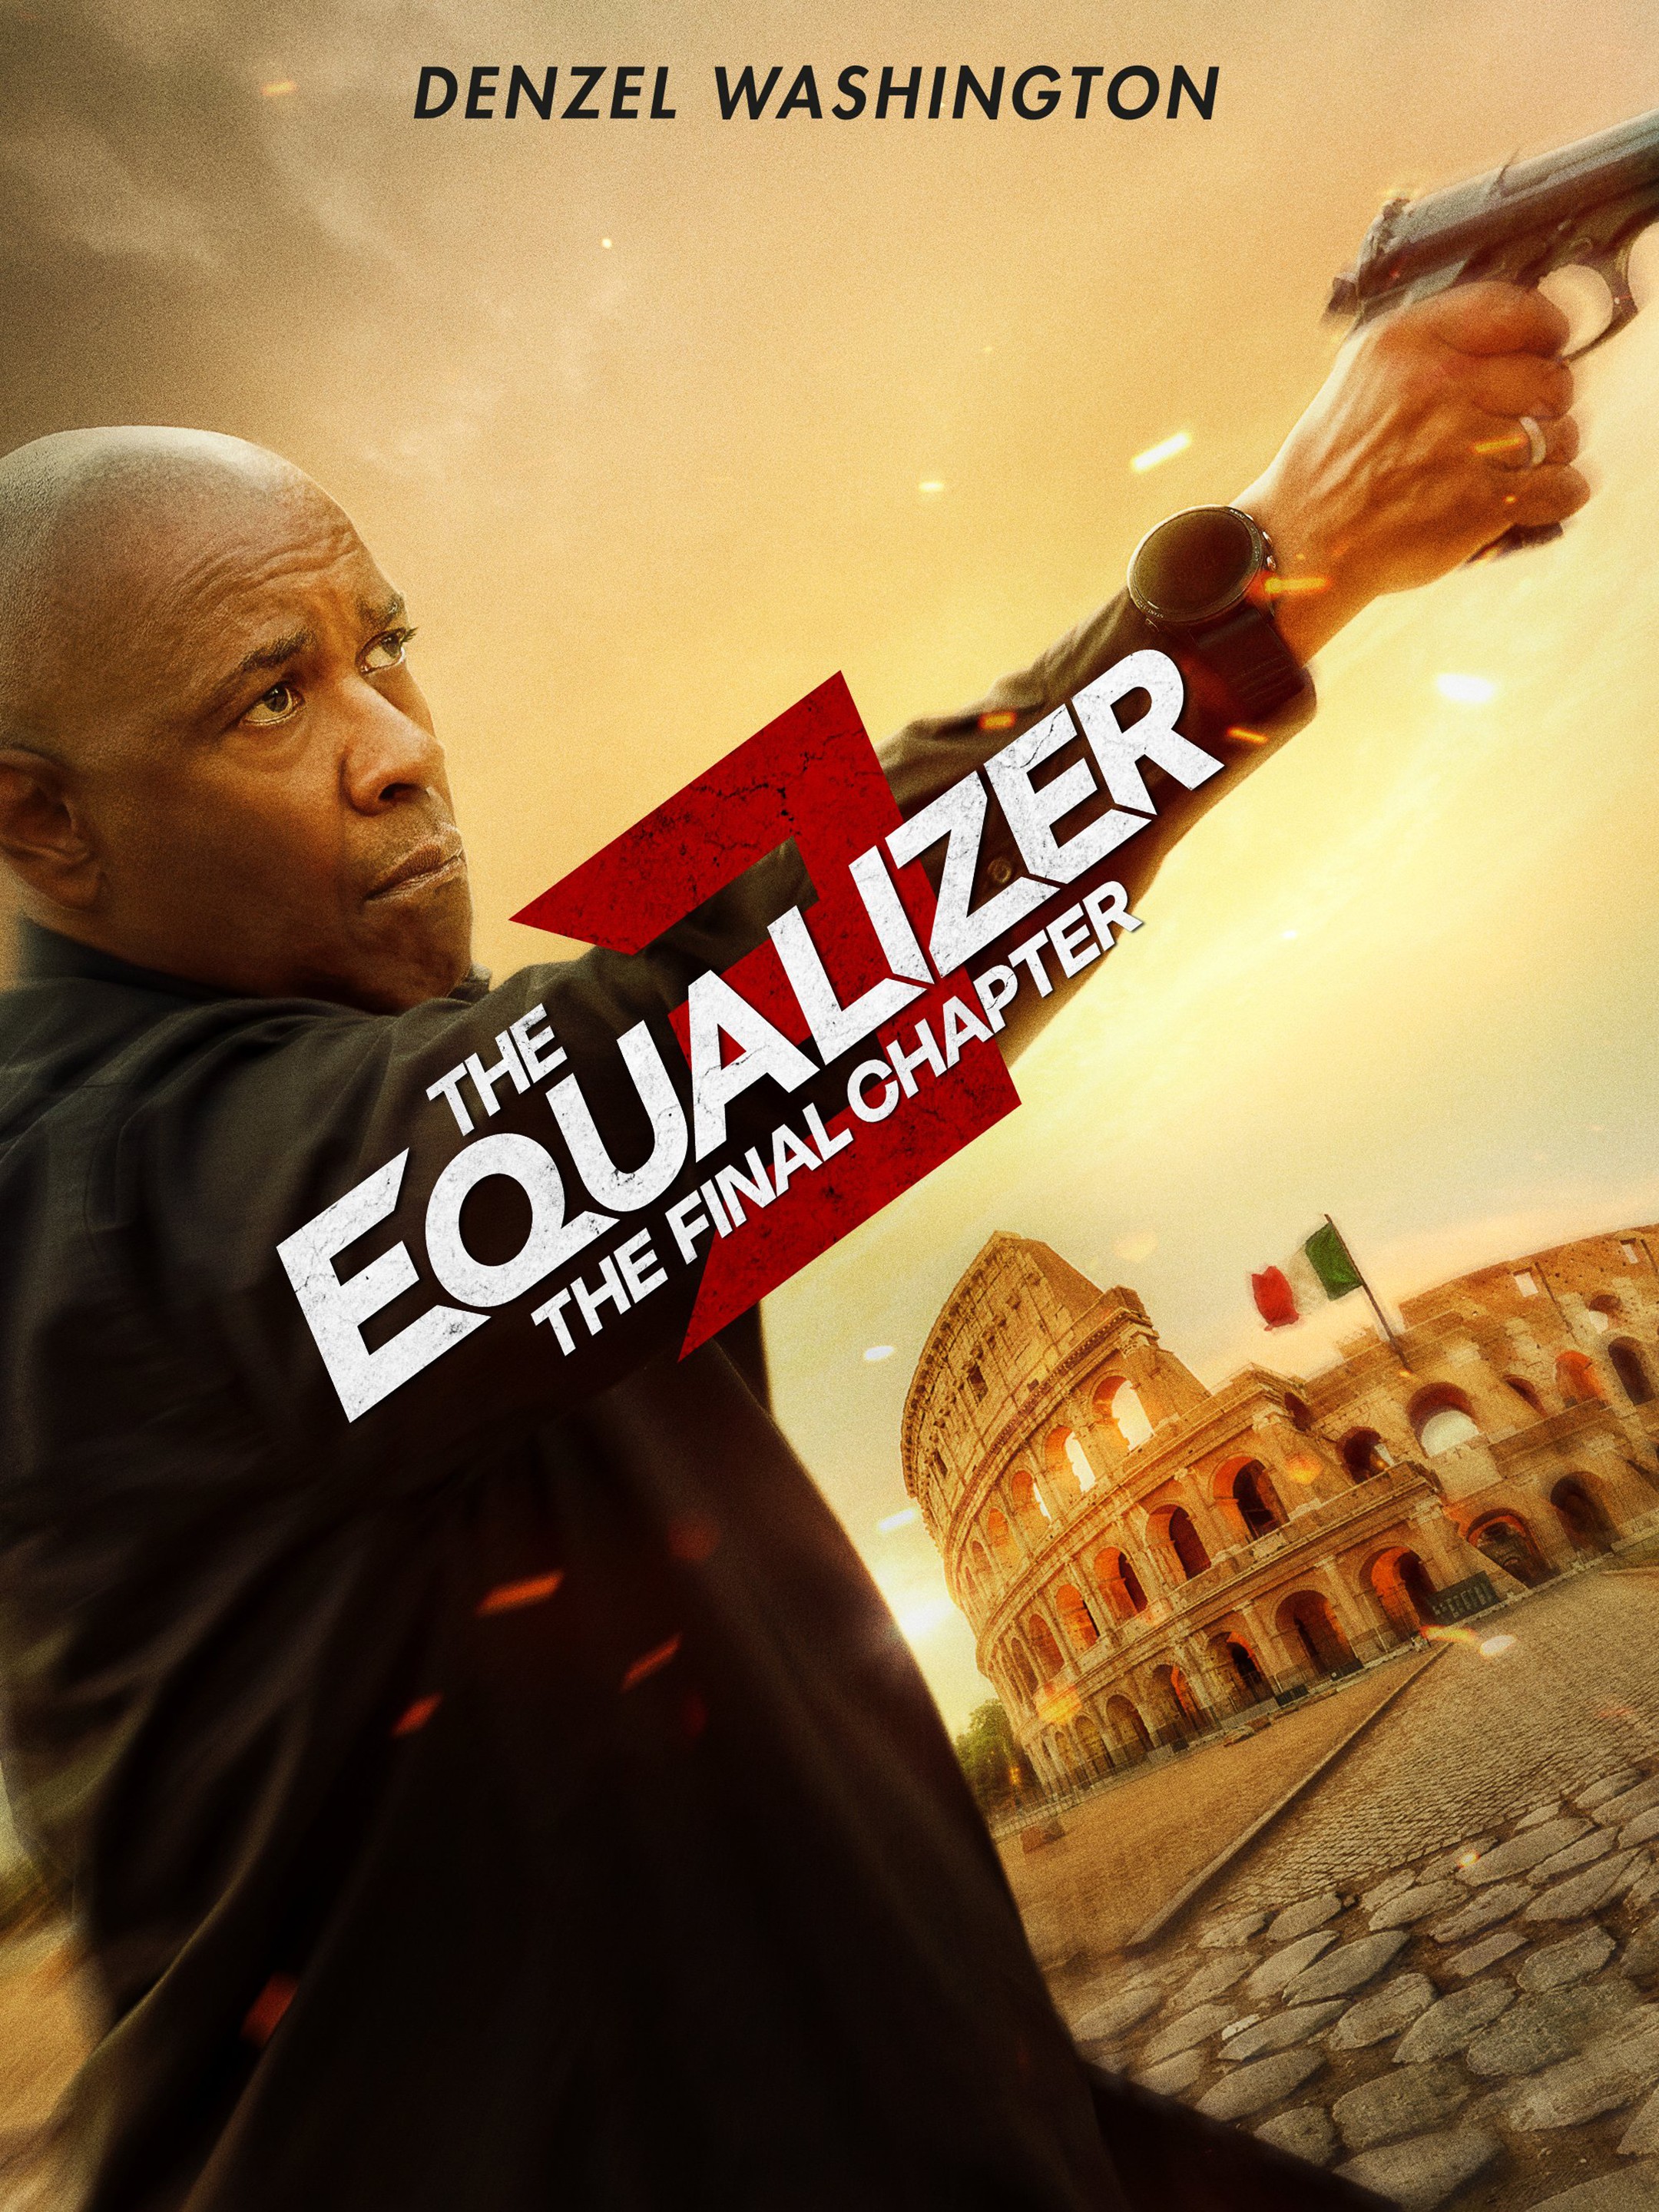 The Equalizer 3' review: Denzel Washington returns